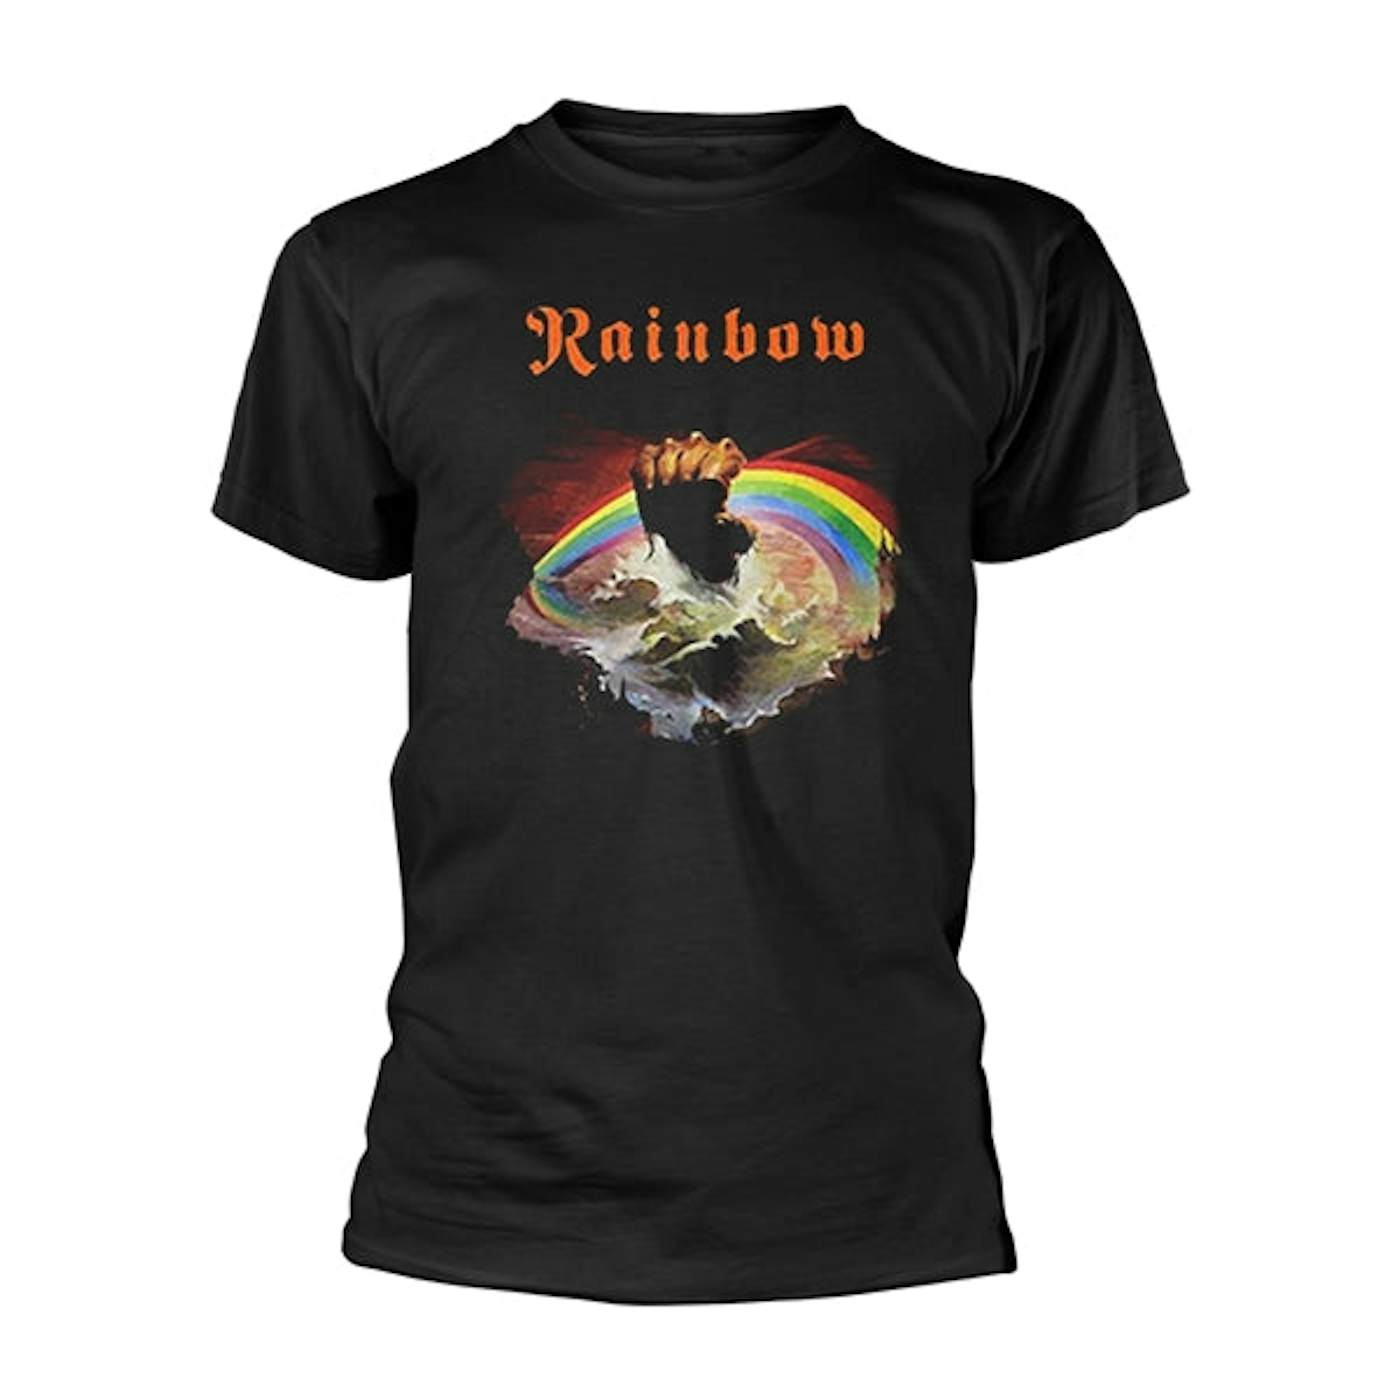 Rainbow T Shirt - Rising (Black)